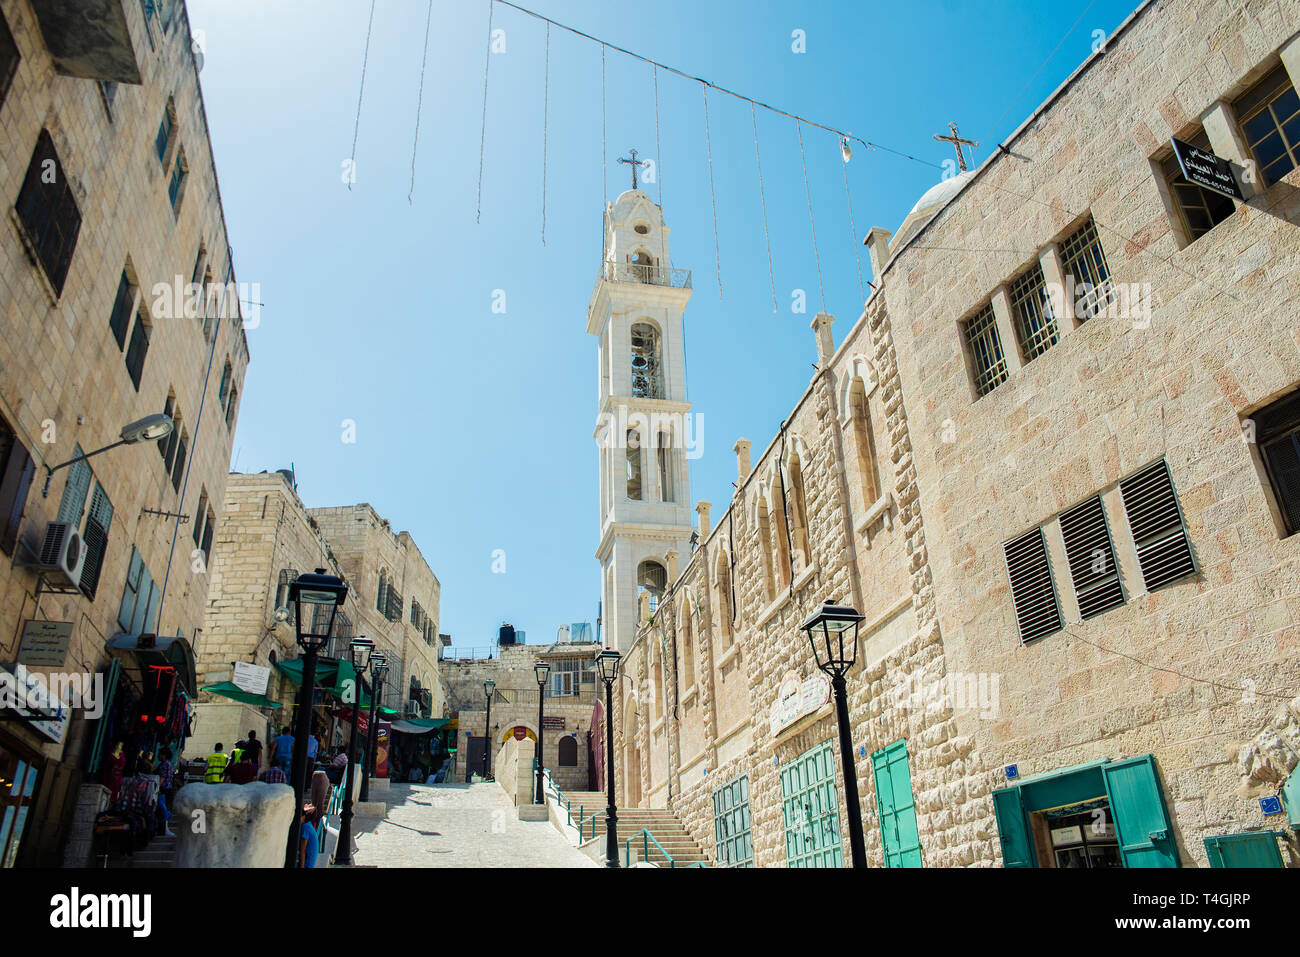 BETHLEHEM, PALESTINE - JUNE 2, 2015: The streets of the old city of Bethlehem. June 2, 2015 Stock Photo